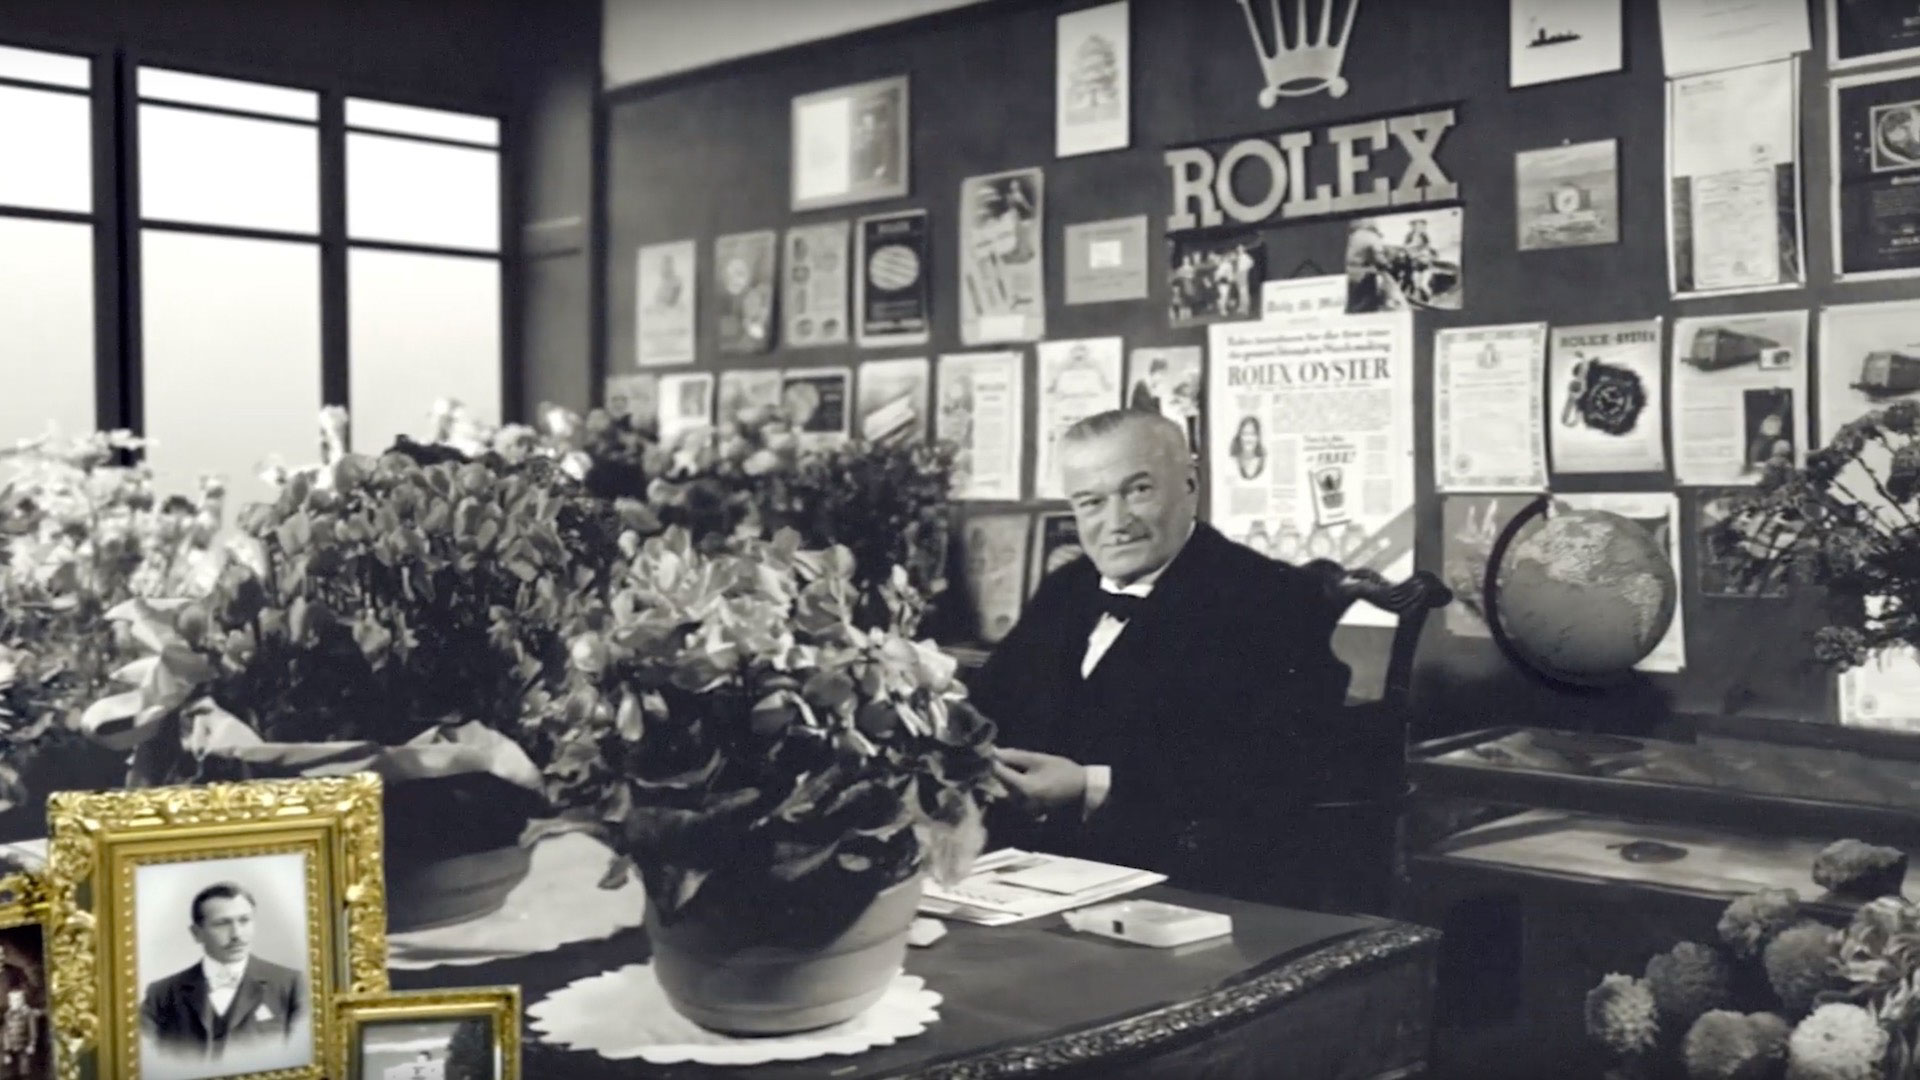 Rolex Launches Rolex.org Website In Tribute To Hans Wilsdorf, The Company’s Founding Spirit & Philanthropy